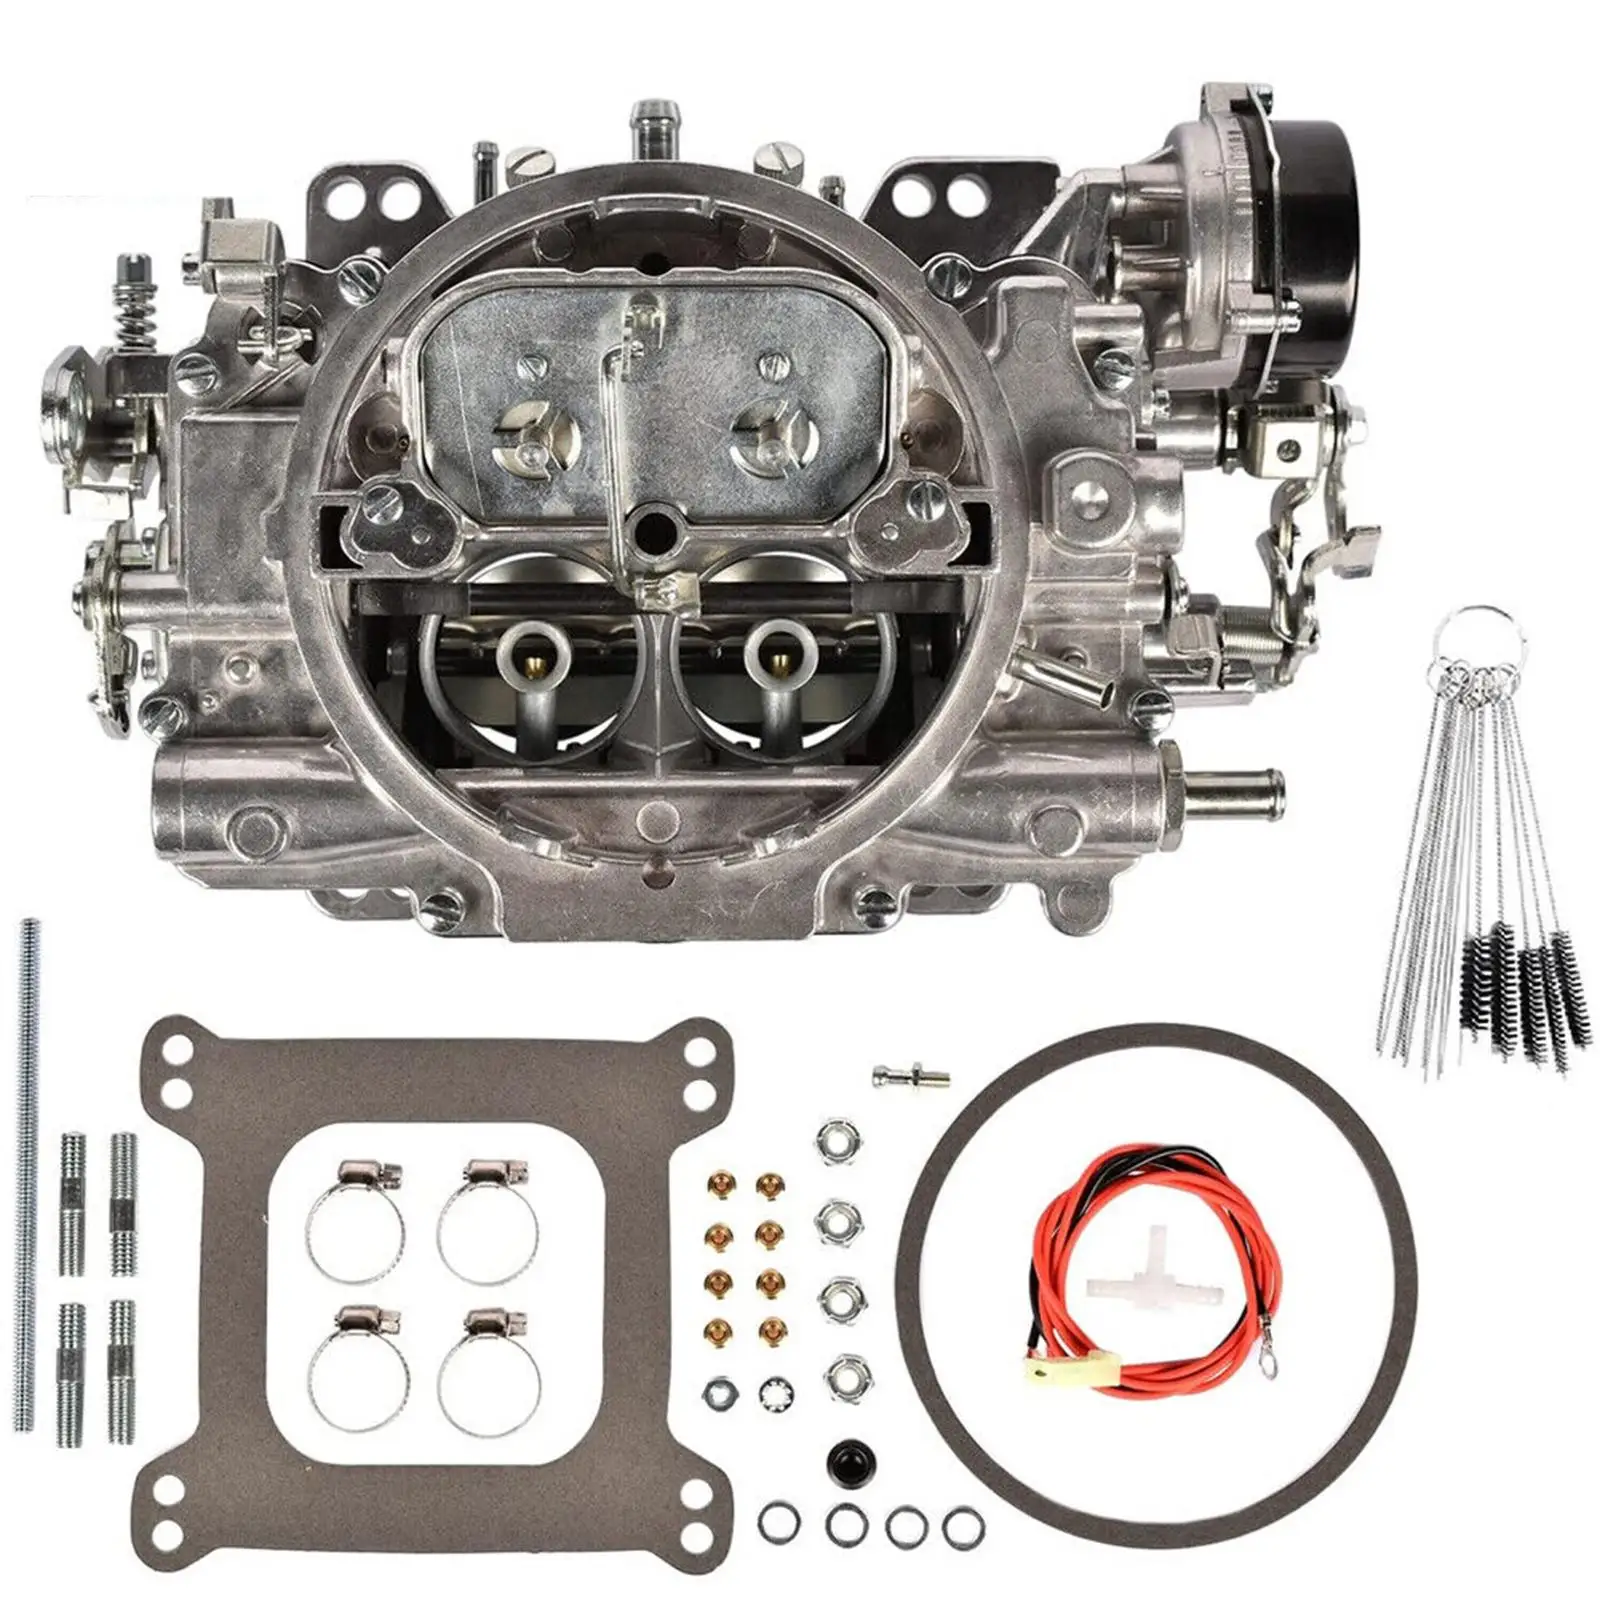 1406 Carburetor High Performance Replace Parts Pickup Truck Carburetor for Performer 600 CFM 4 Barrel with Electric Choke